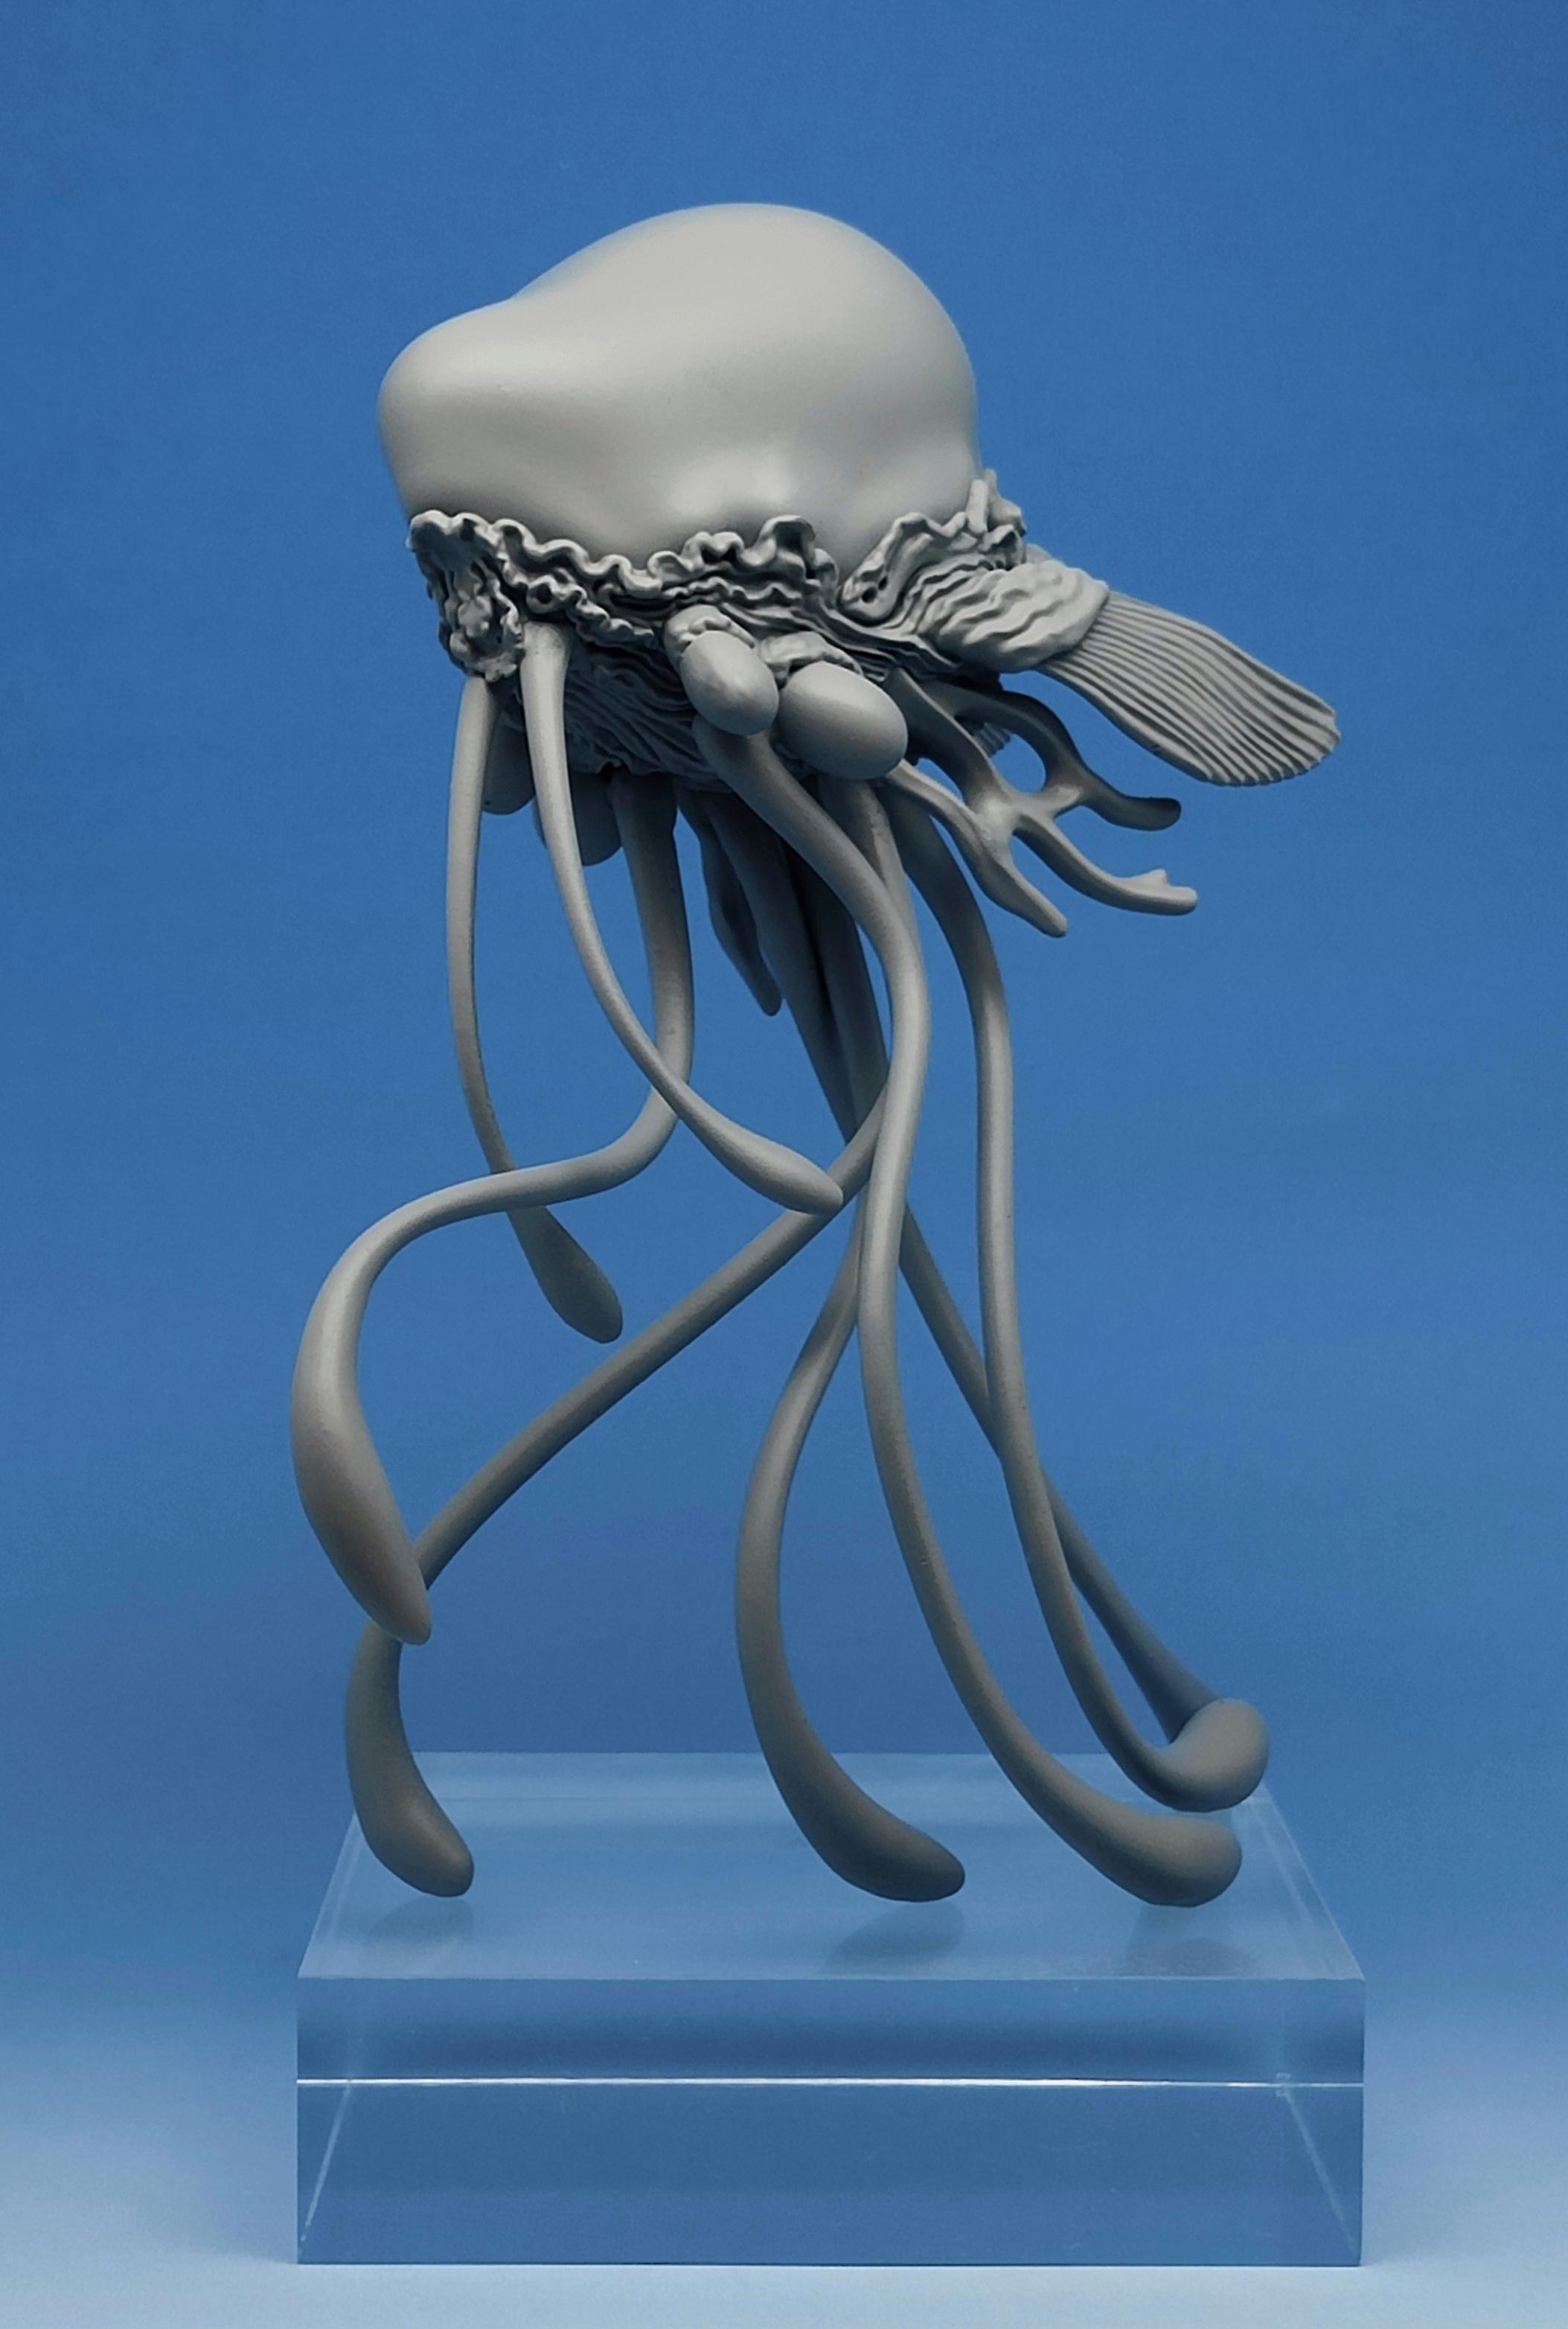 Jellyfish Biomech - Cyanea, Lemurian Sandwalker (Pre-supported) 3d model